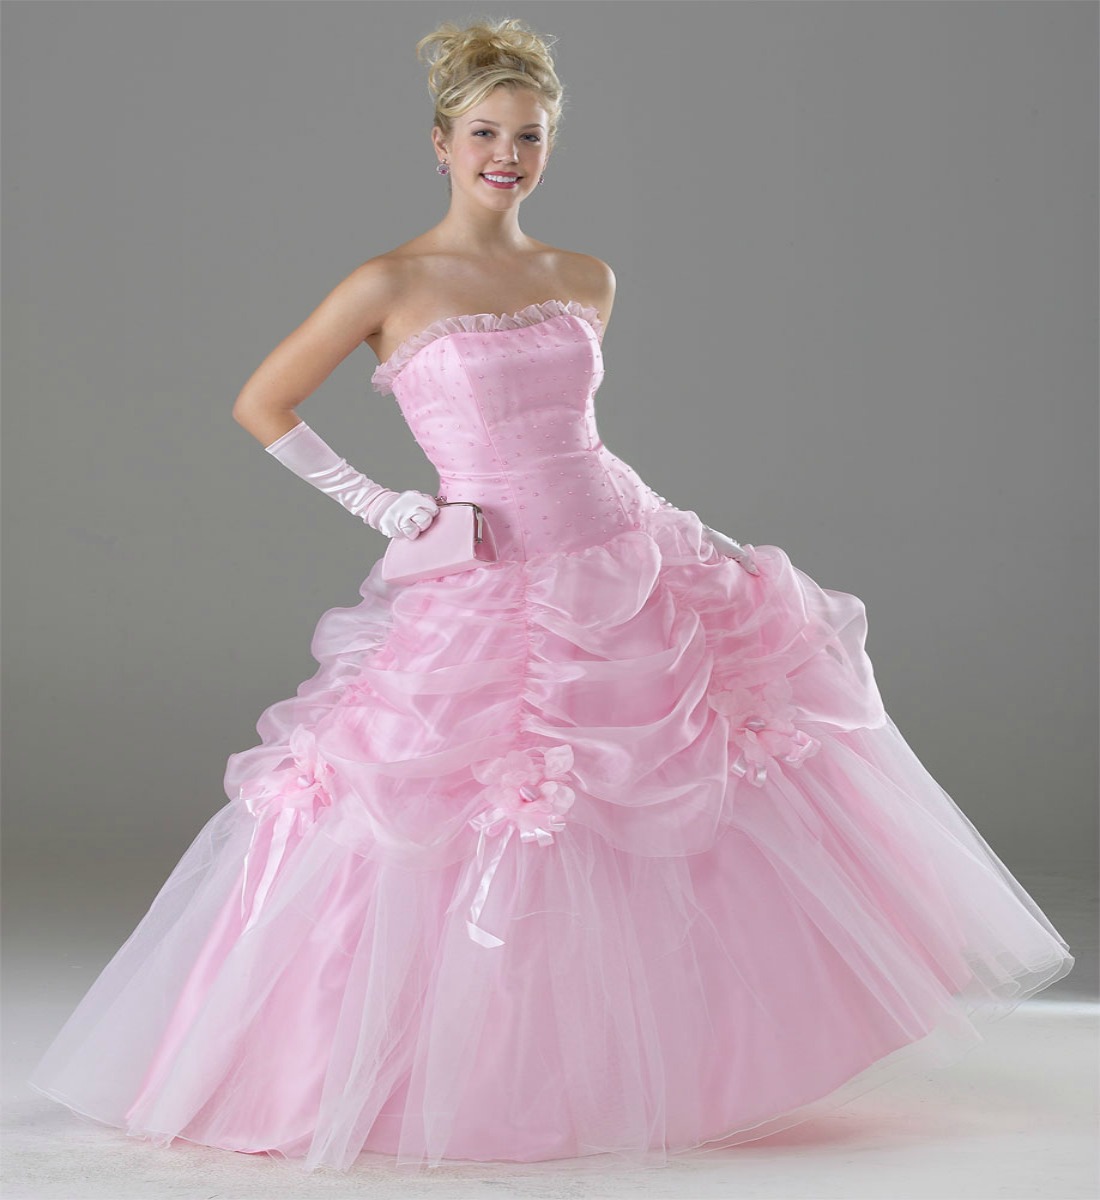 Pink Bridal Dress Wallpaper